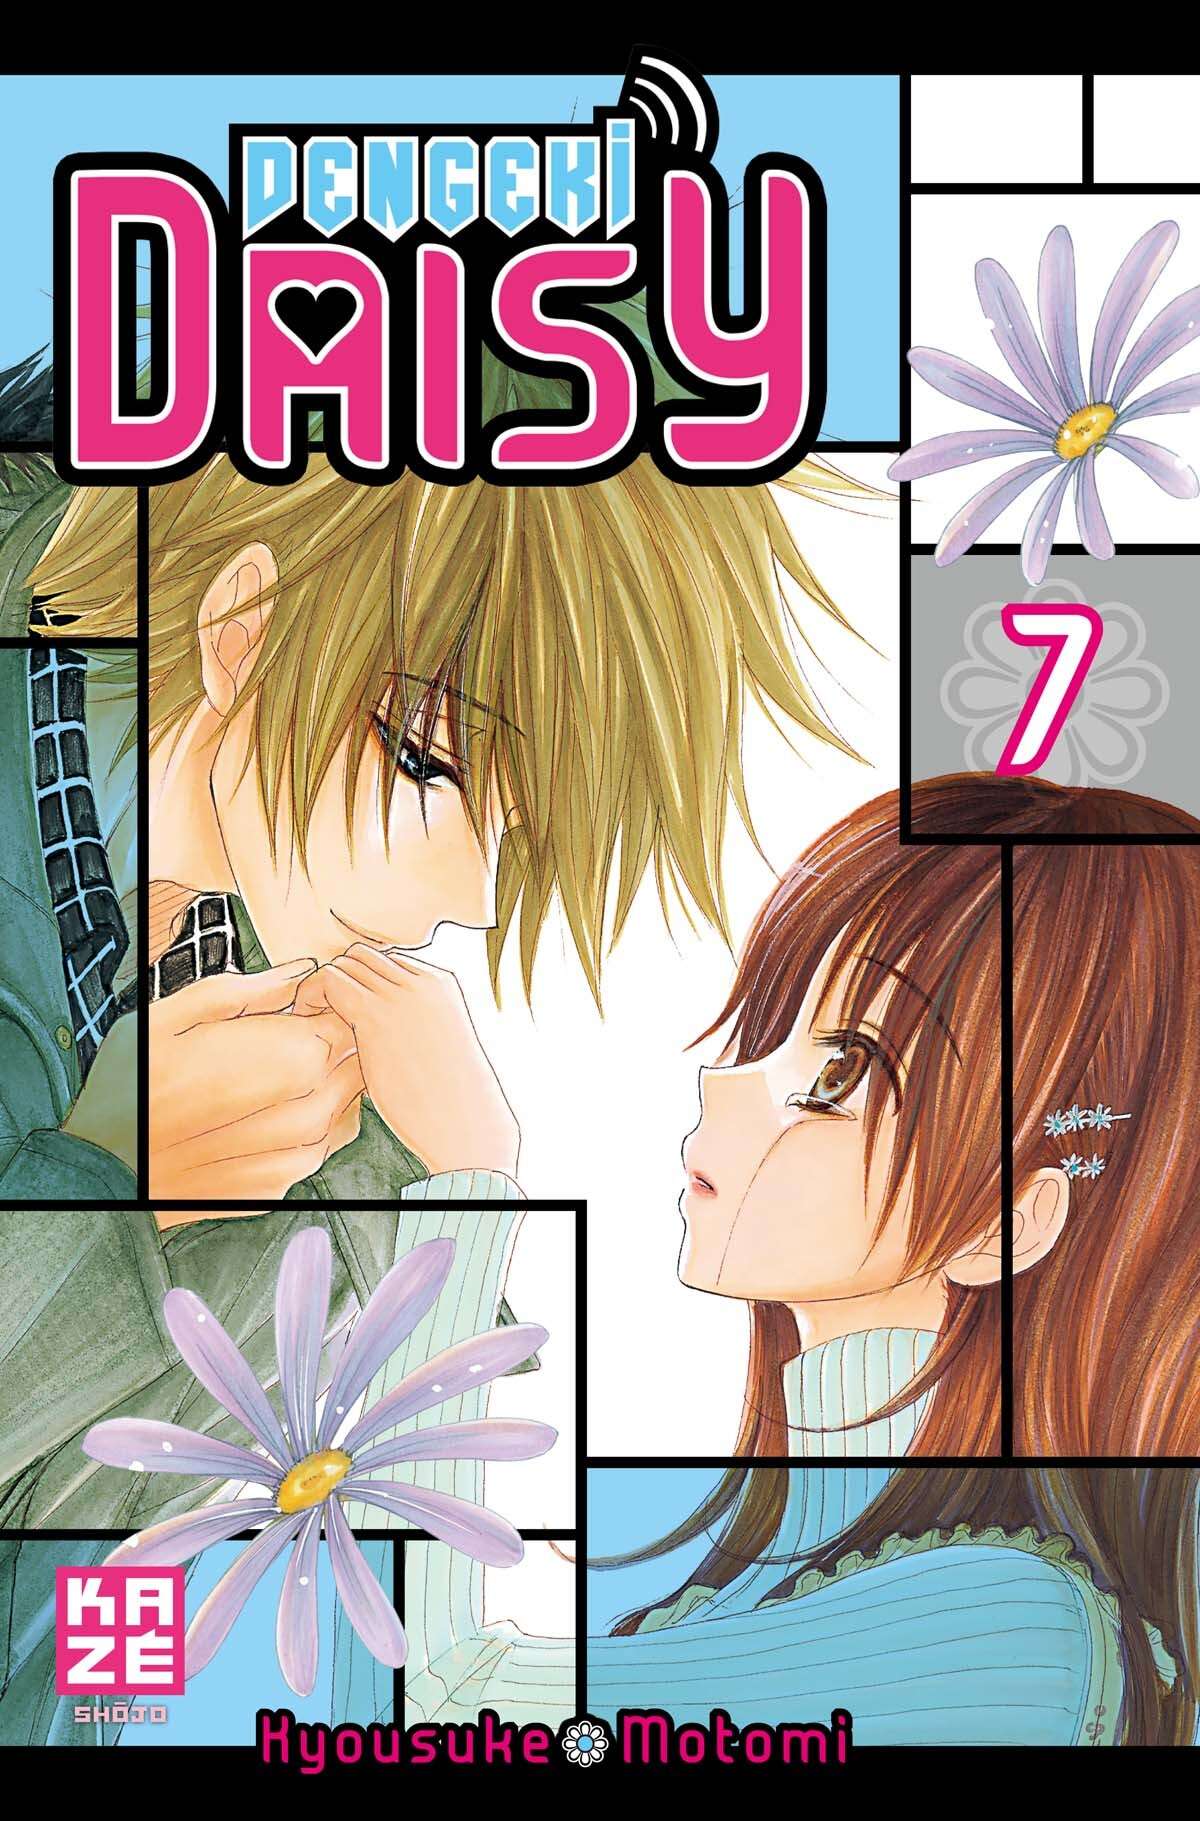 Dengeki Daisy Volume 7 page 1